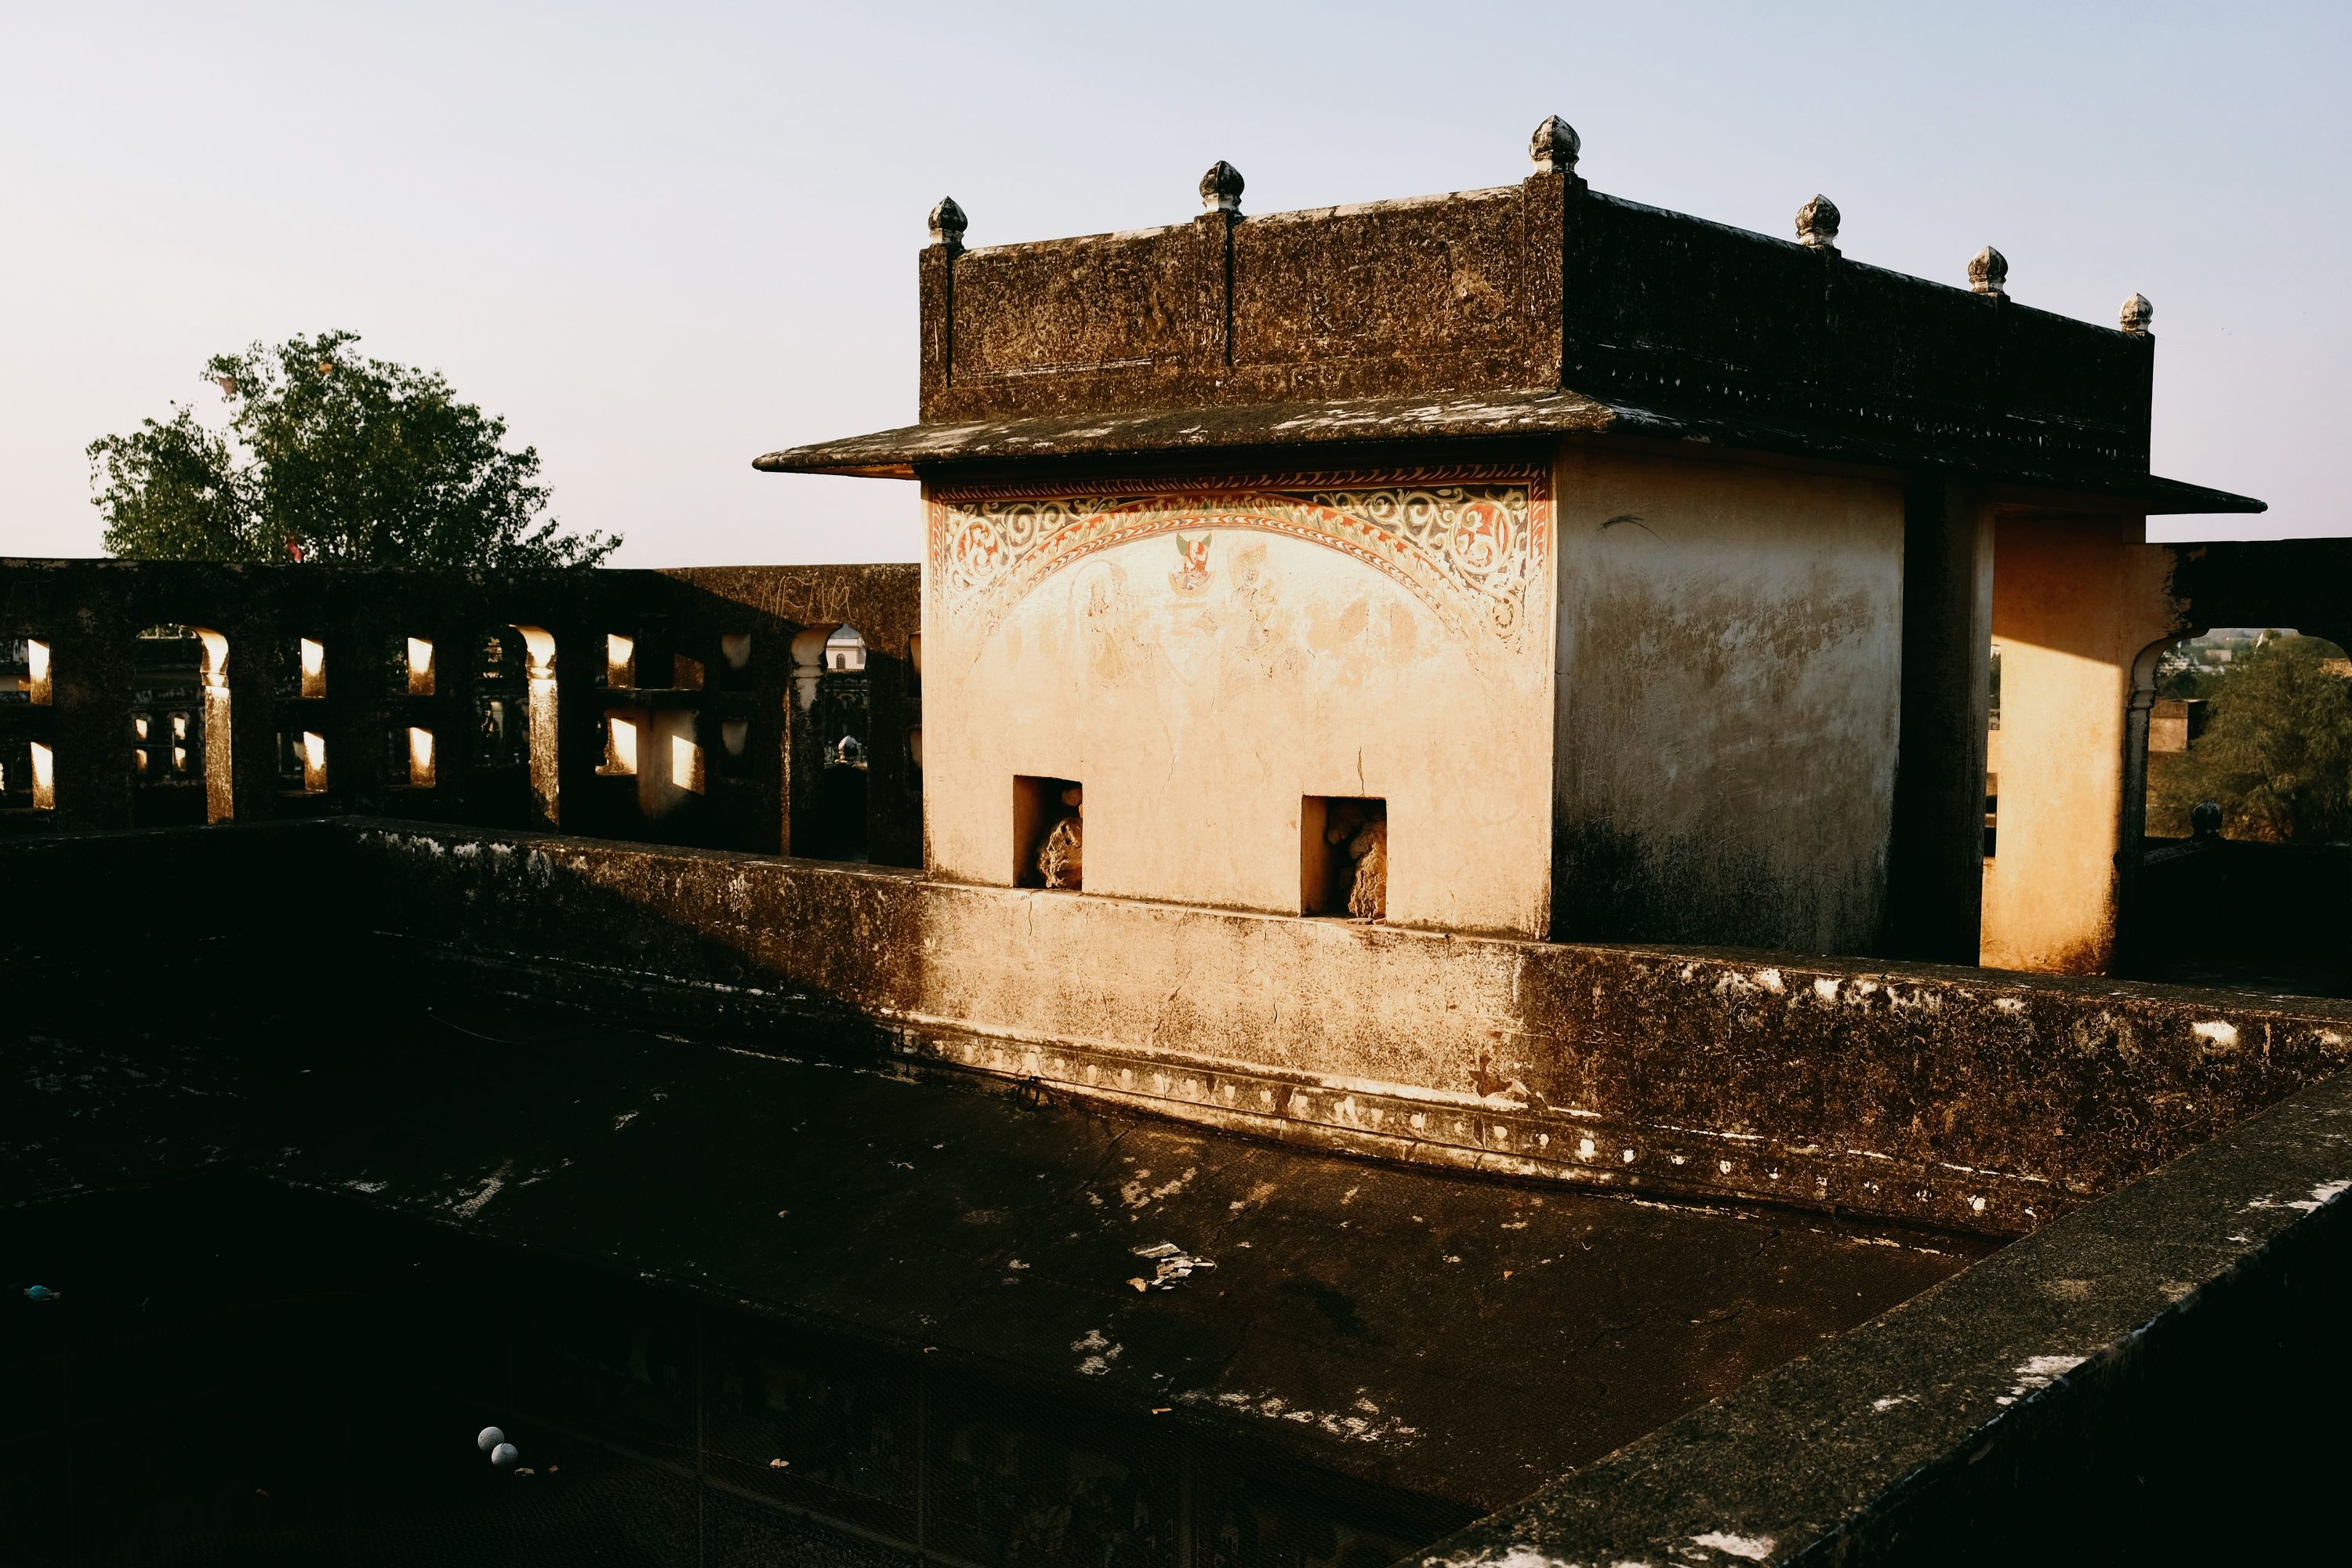 Rooftop of a timeless haveli. Mandawa, Rajasthan, India. January 2021.